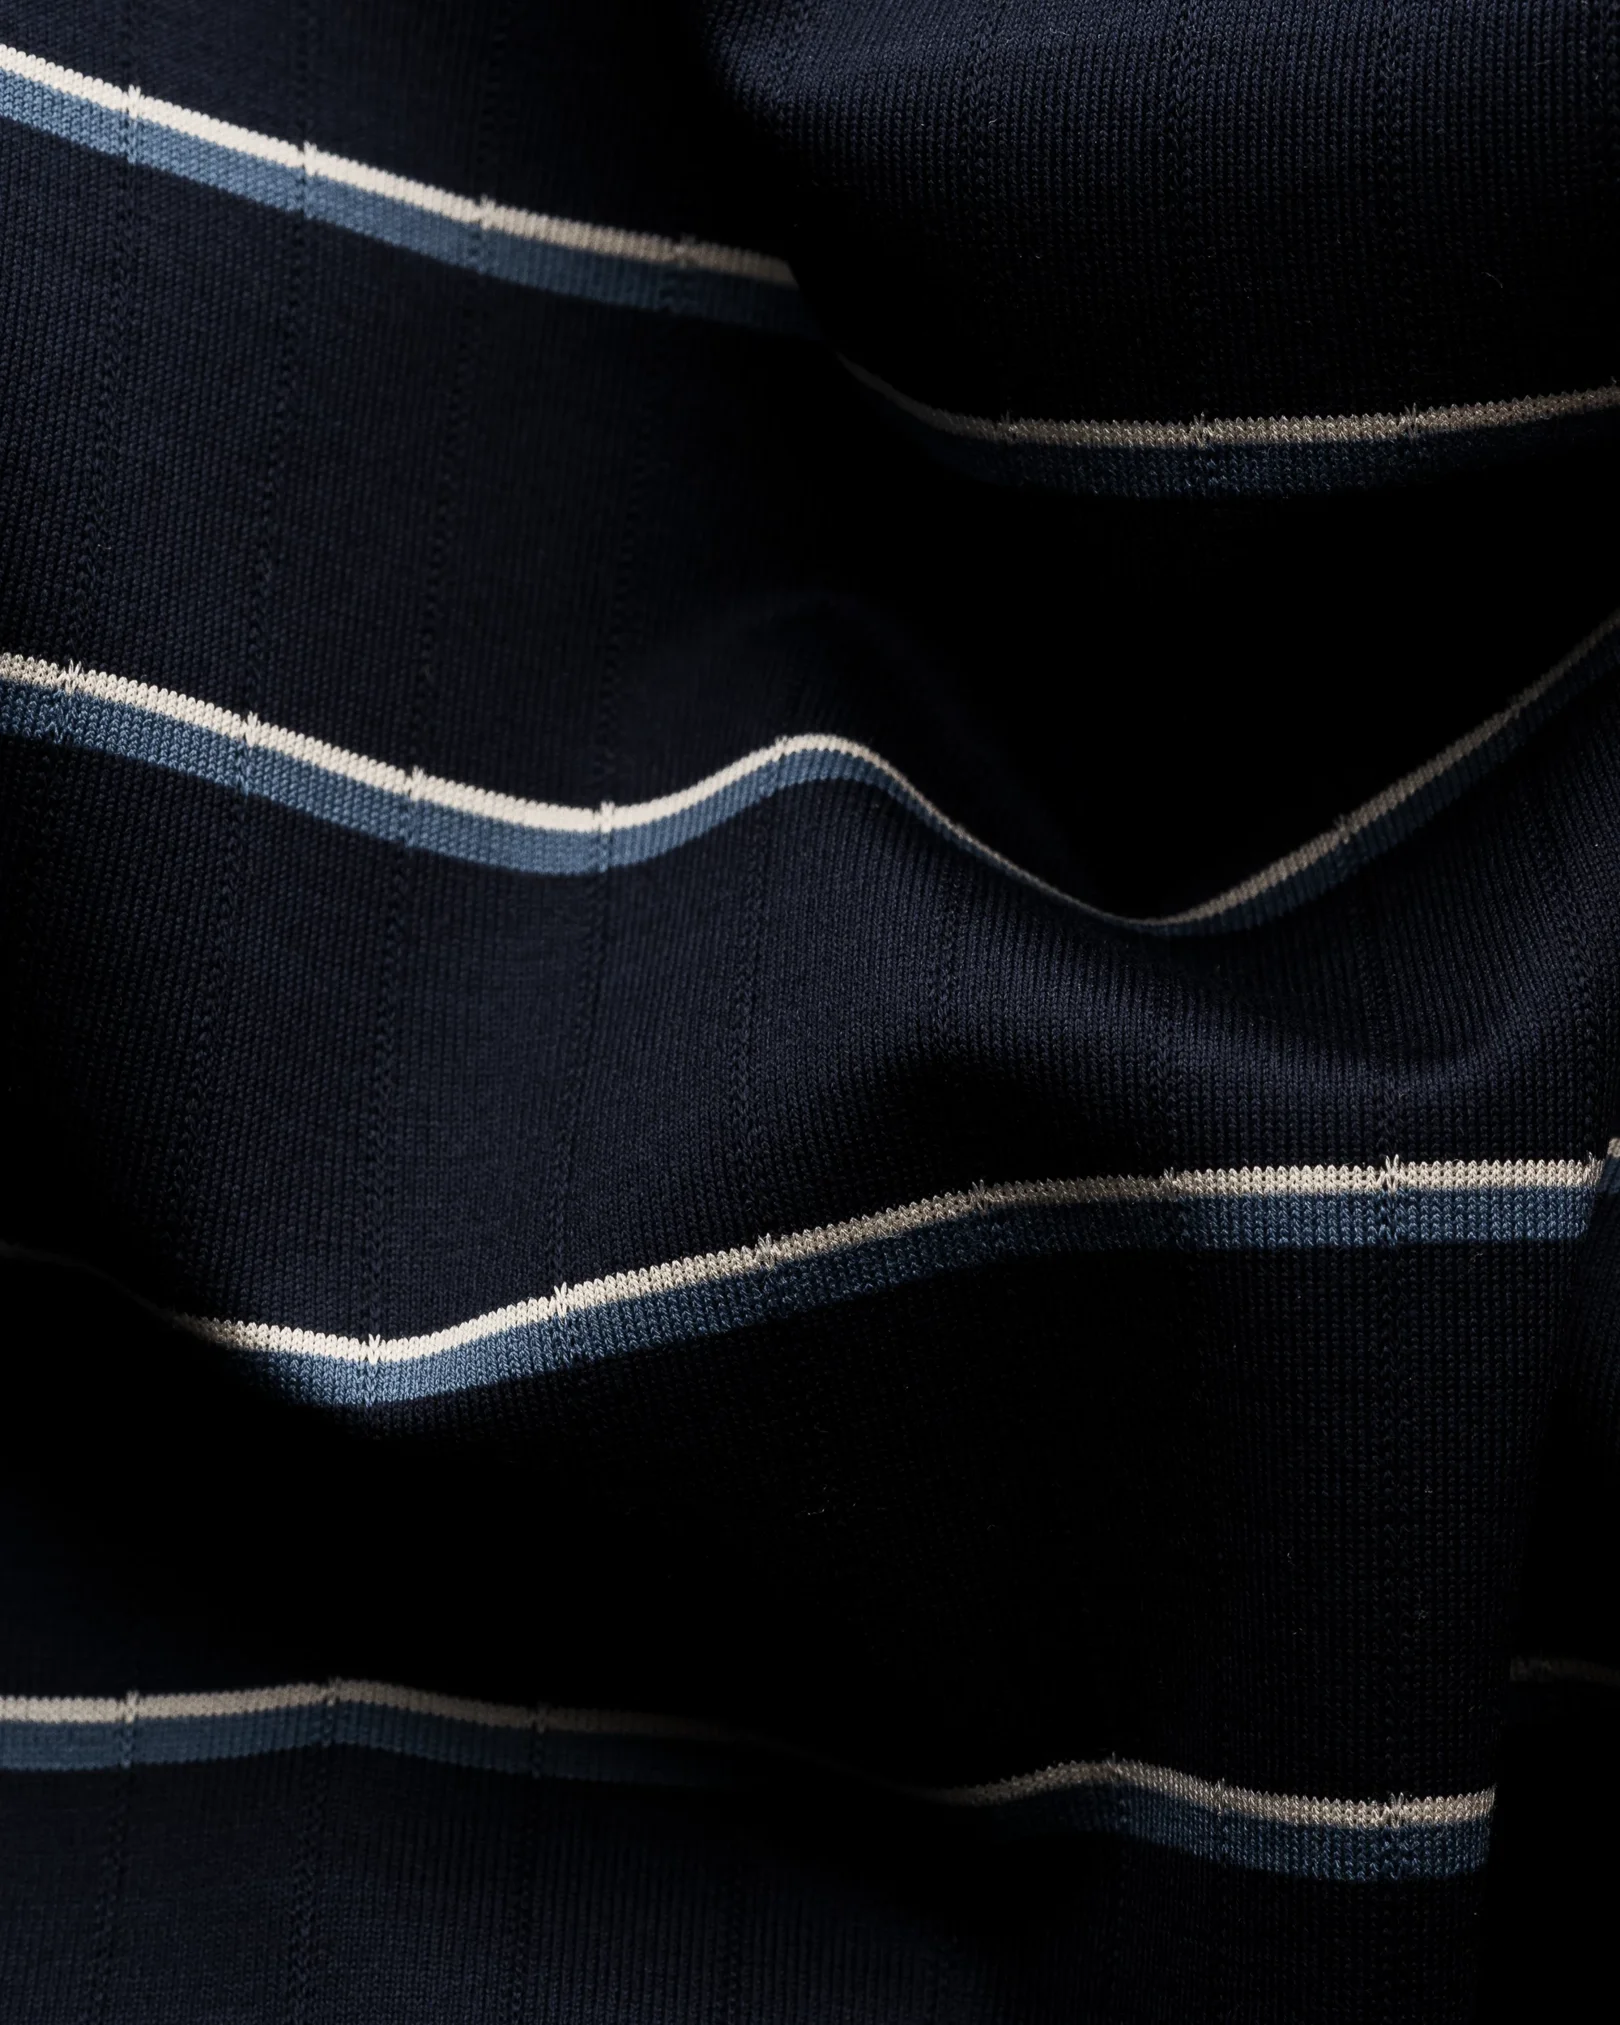 Eton - Navy Striped Filo di Scozia Jacquard Half Zip Polo Shirt